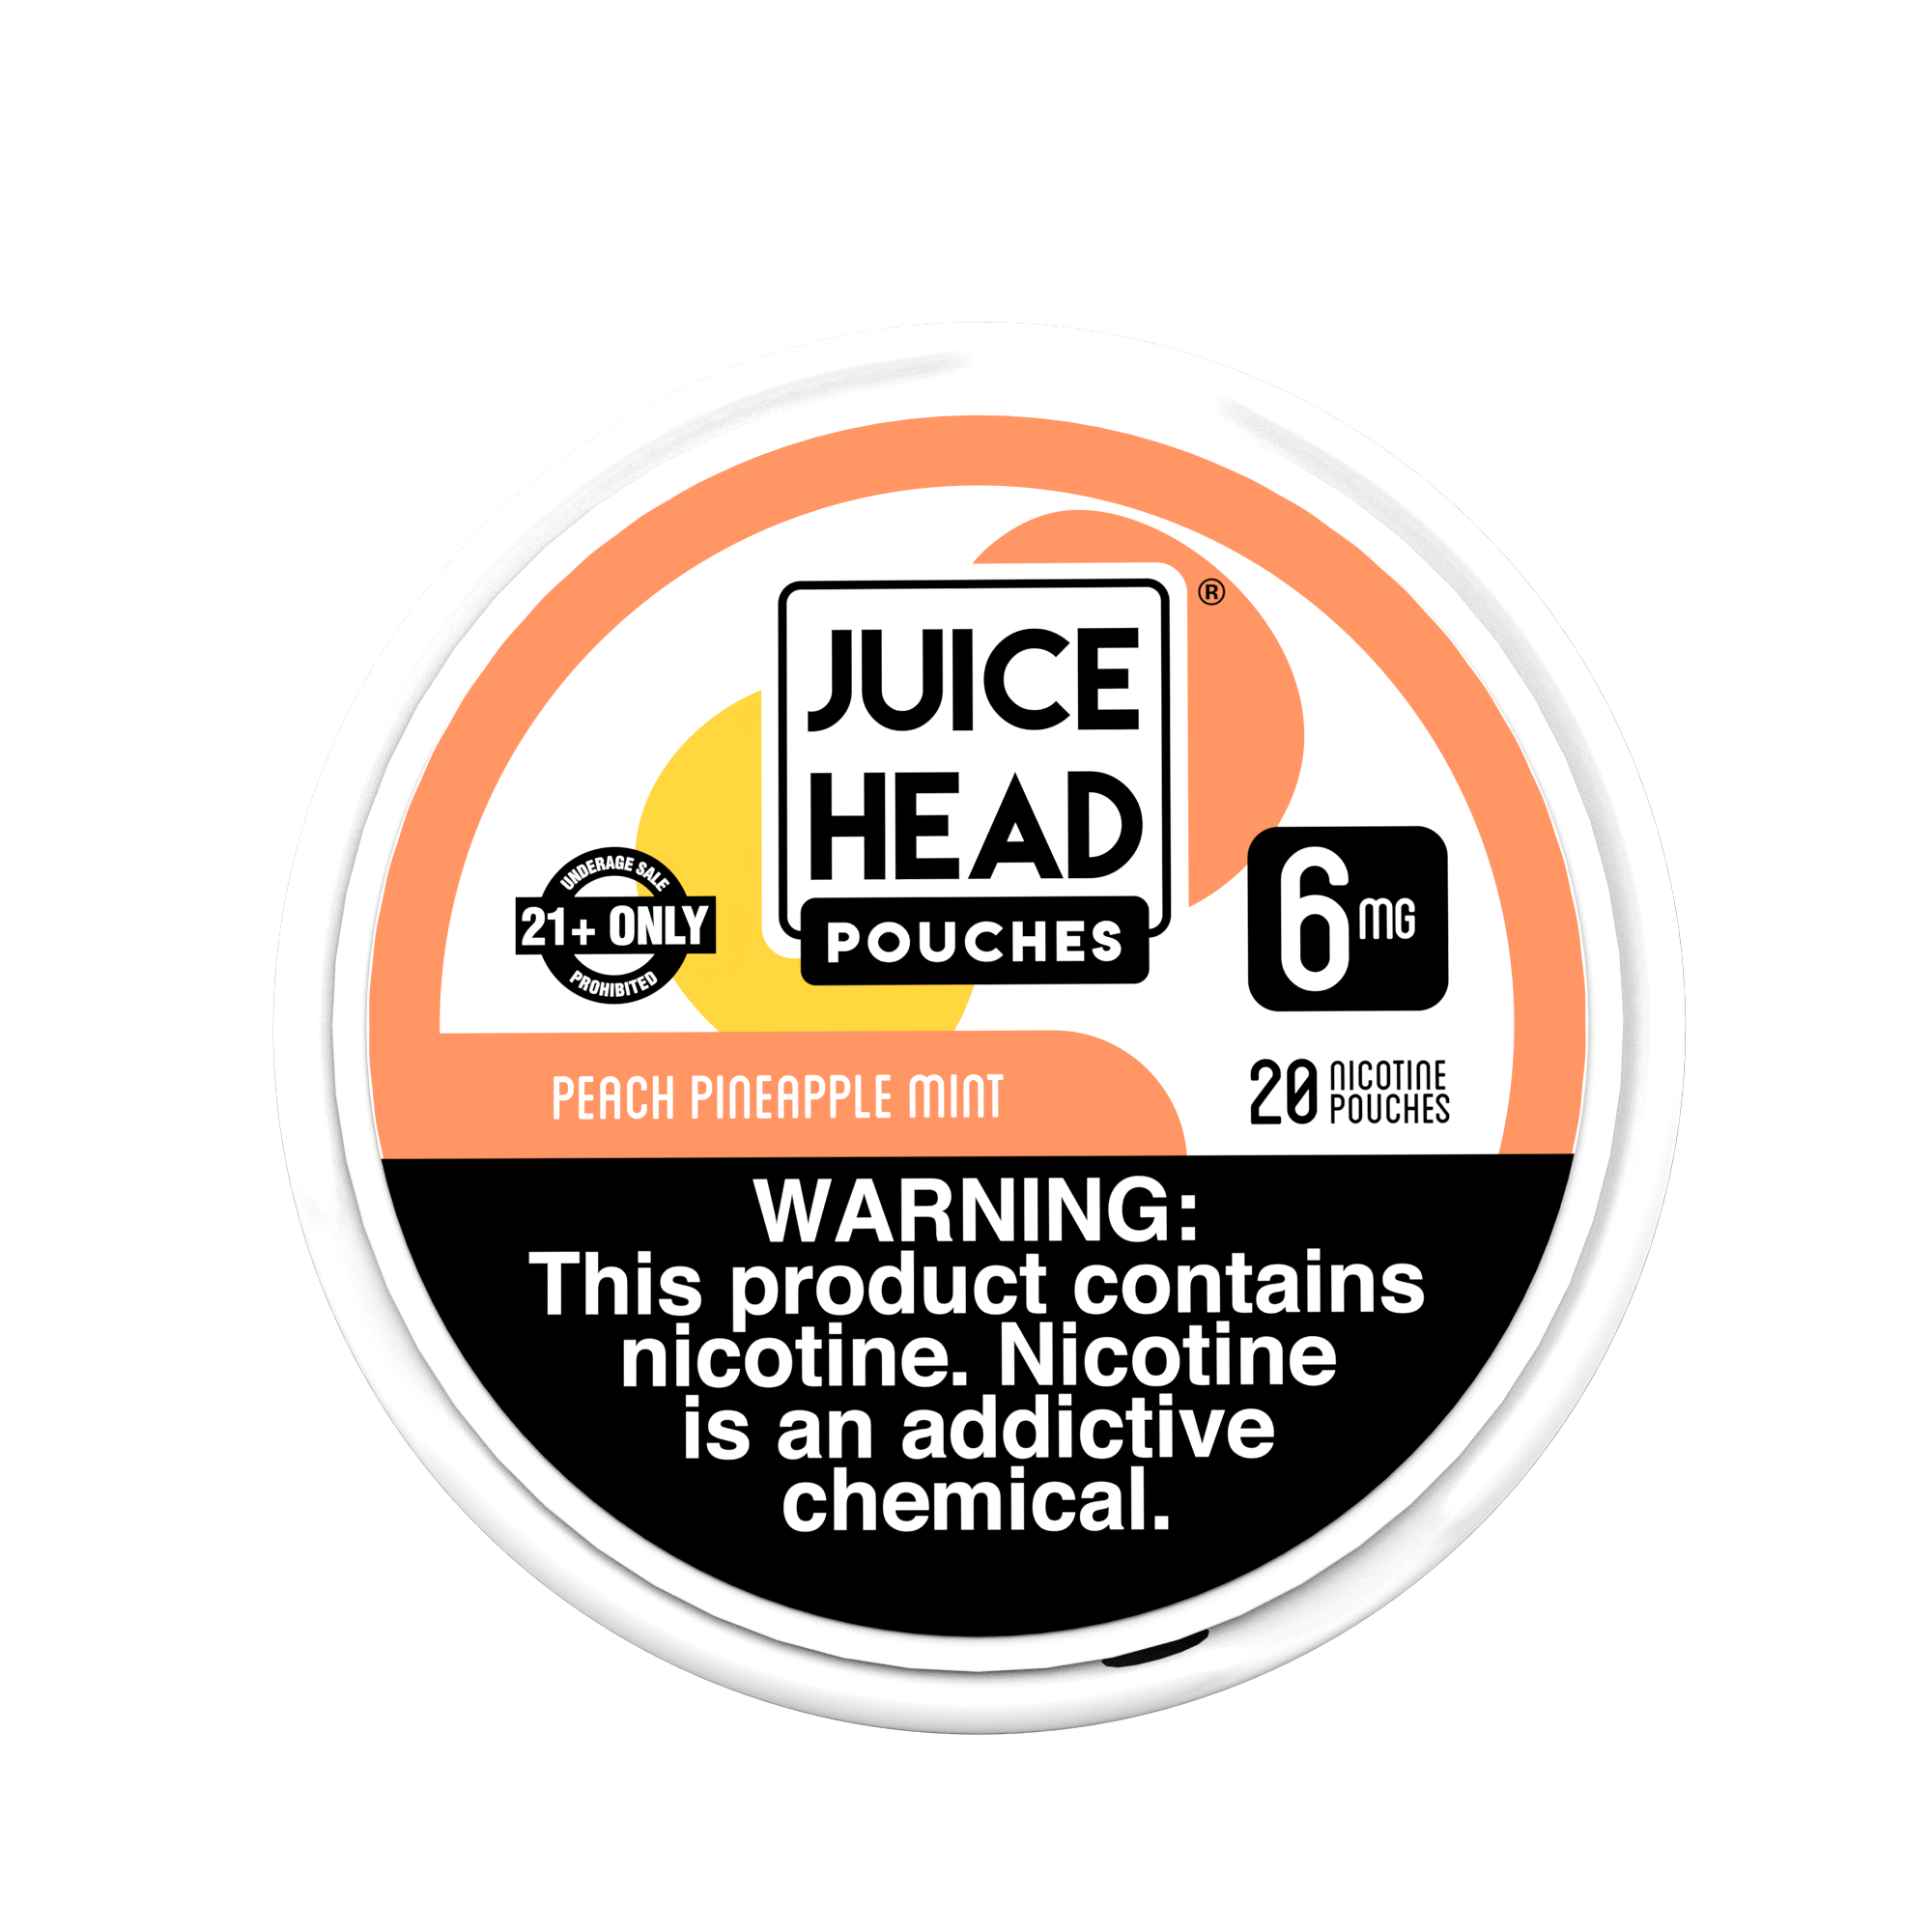 JUICE HEAD POUCHES - Peach Pineapple Mint